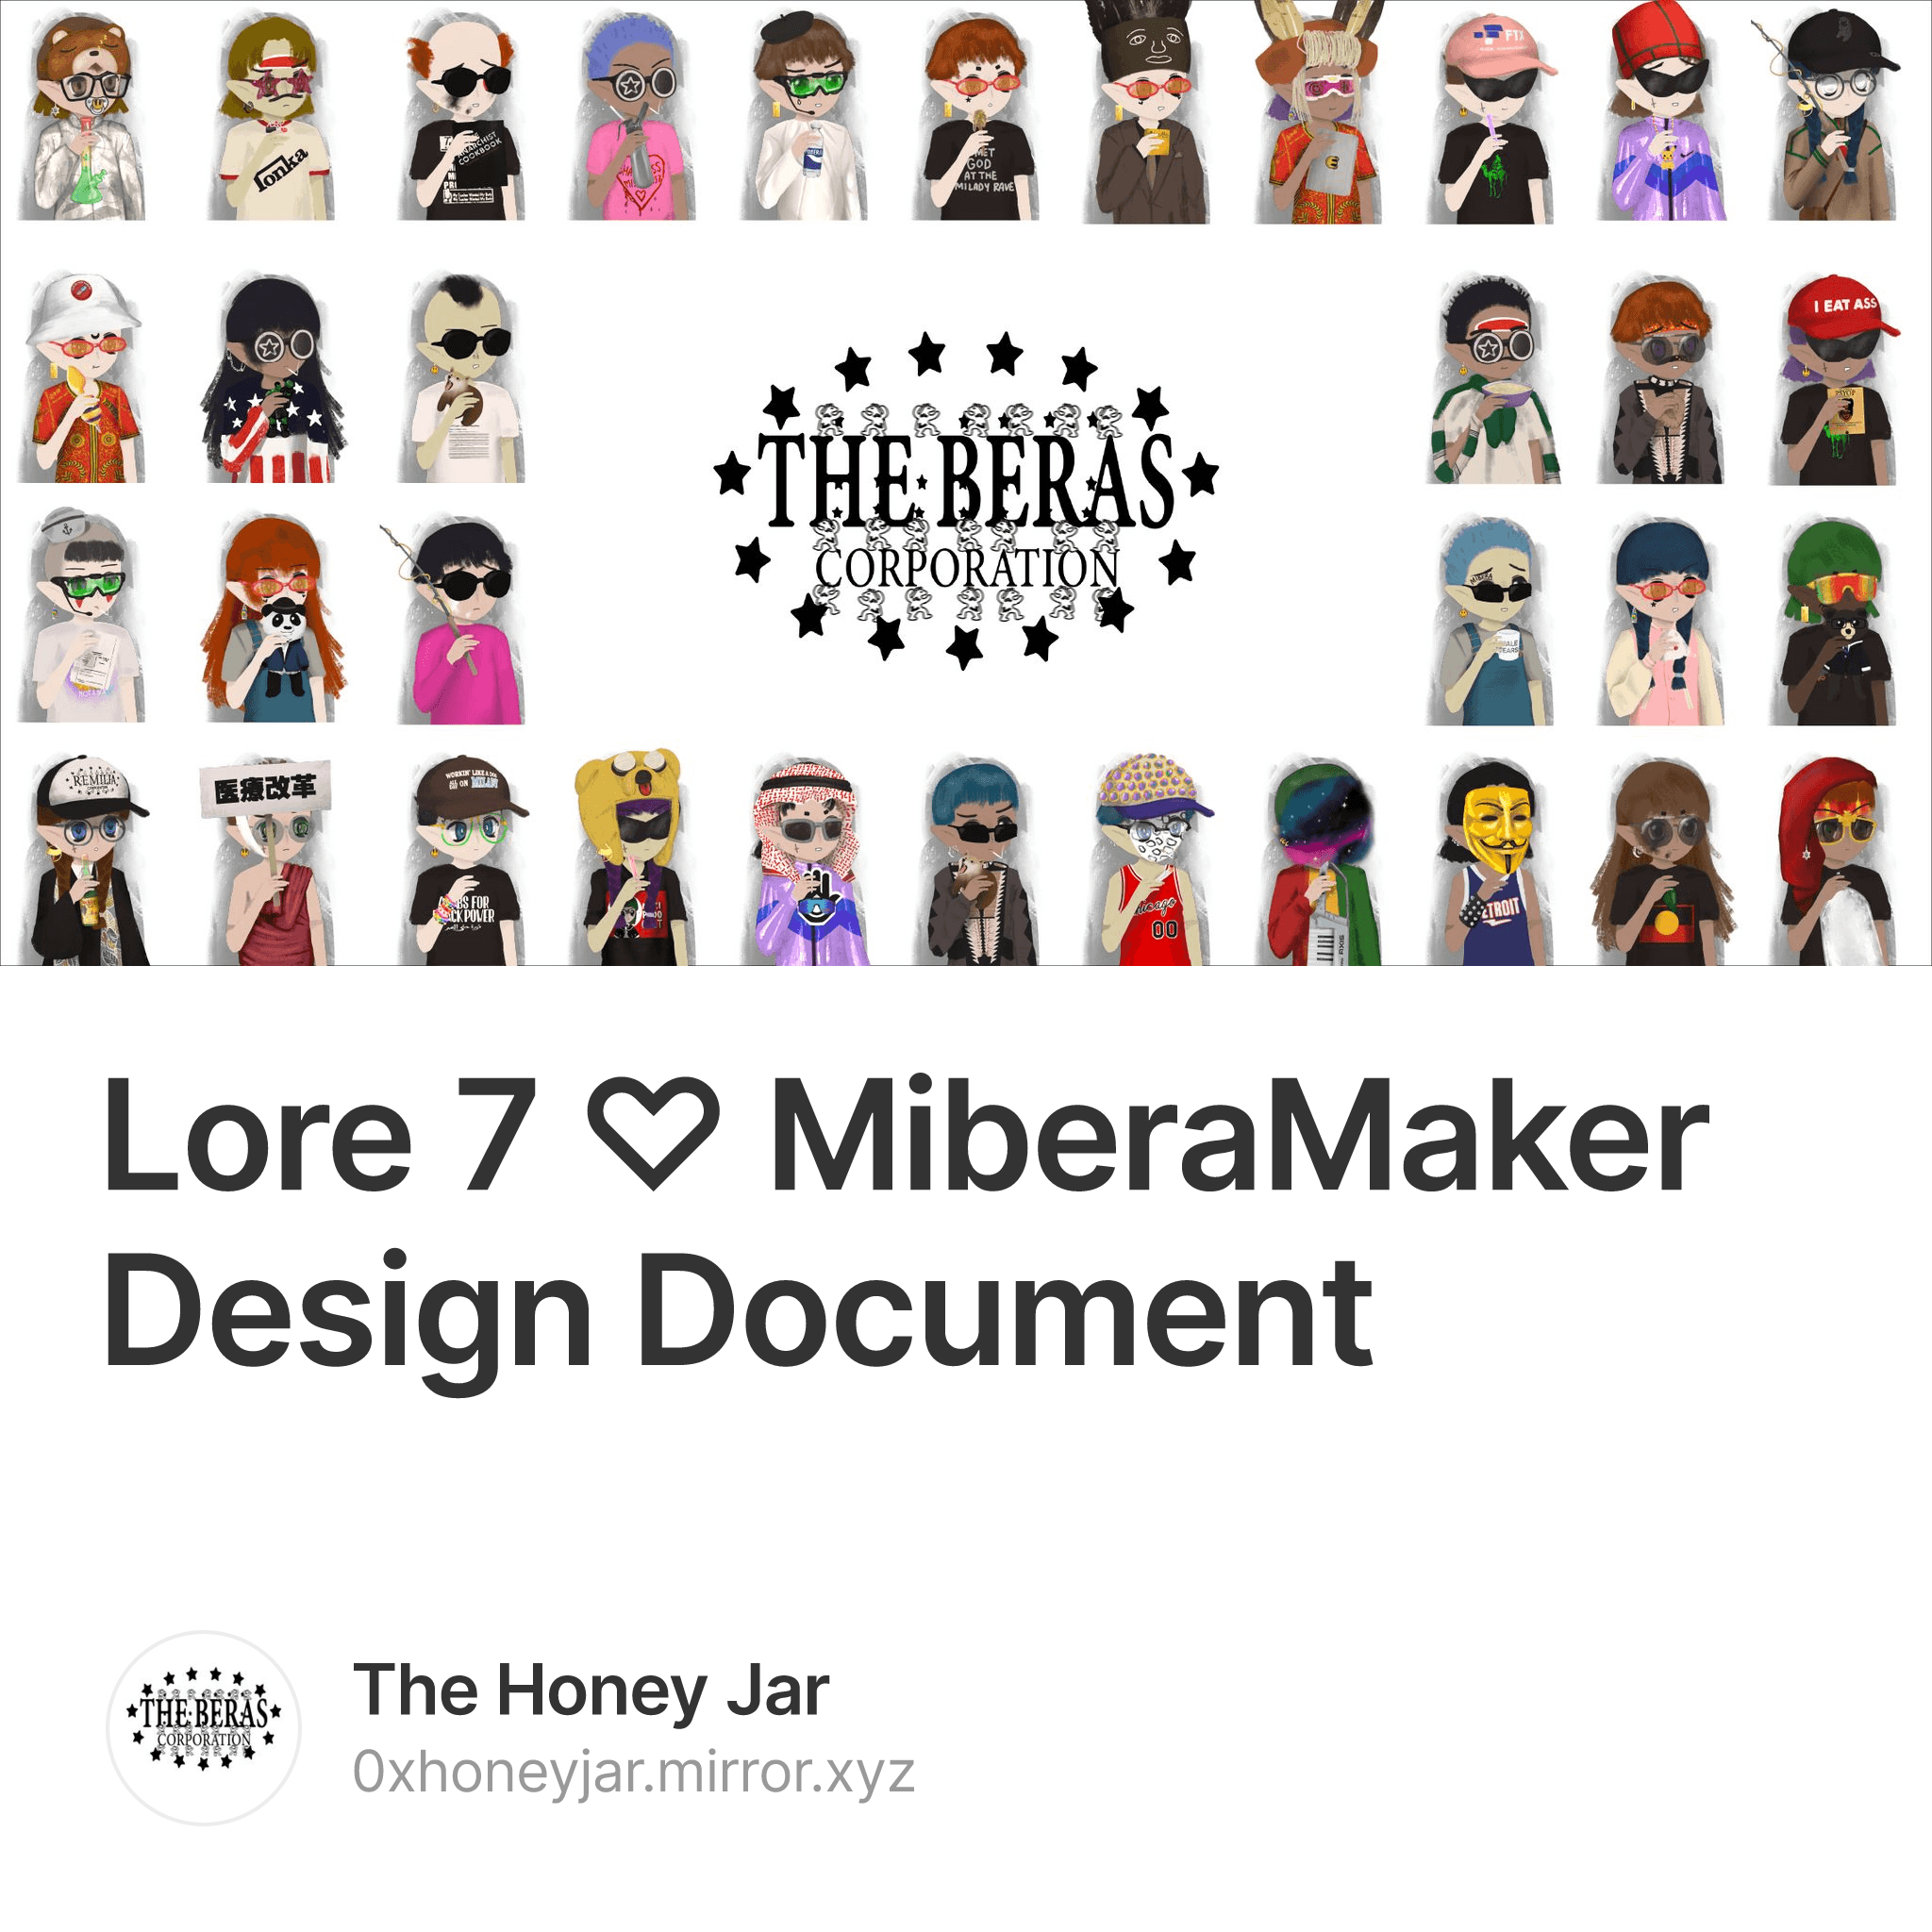 Lore 7 ♡ MiberaMaker Design Document 86/107